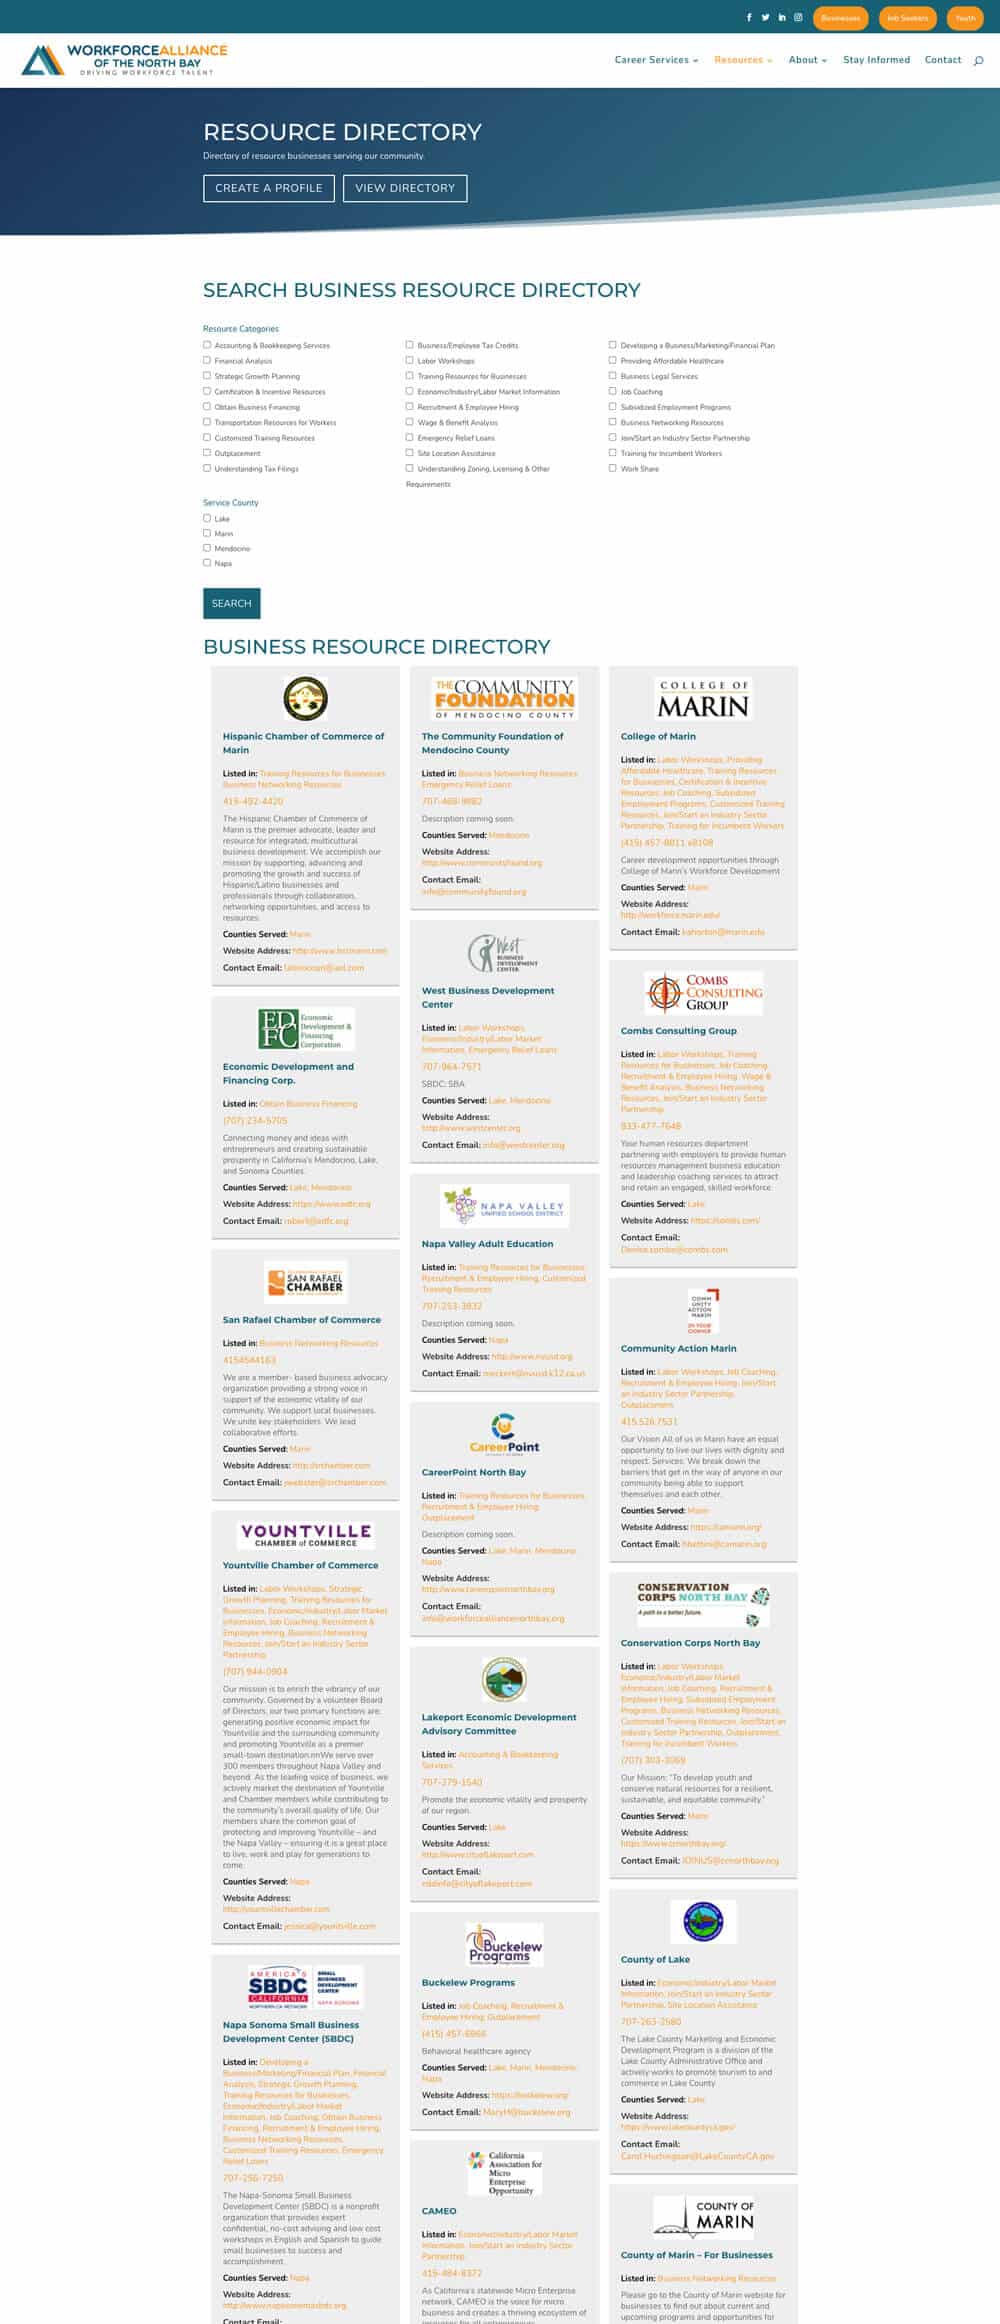 workforce-alliance-resource-directory-page